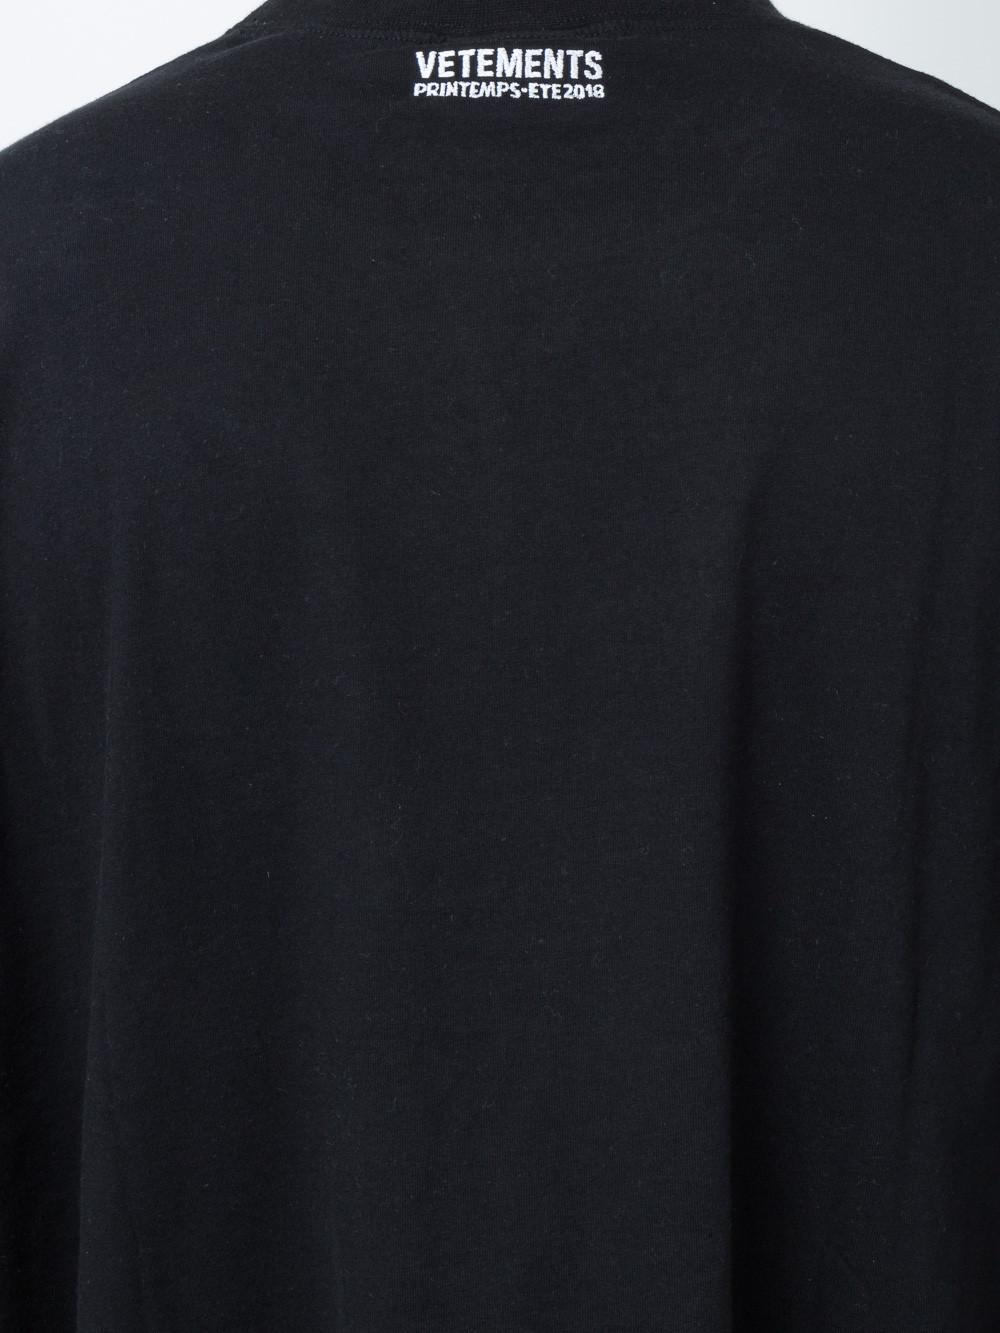 Vetements Cotton Haute Couture Tee-shirt in Black for Men - Lyst